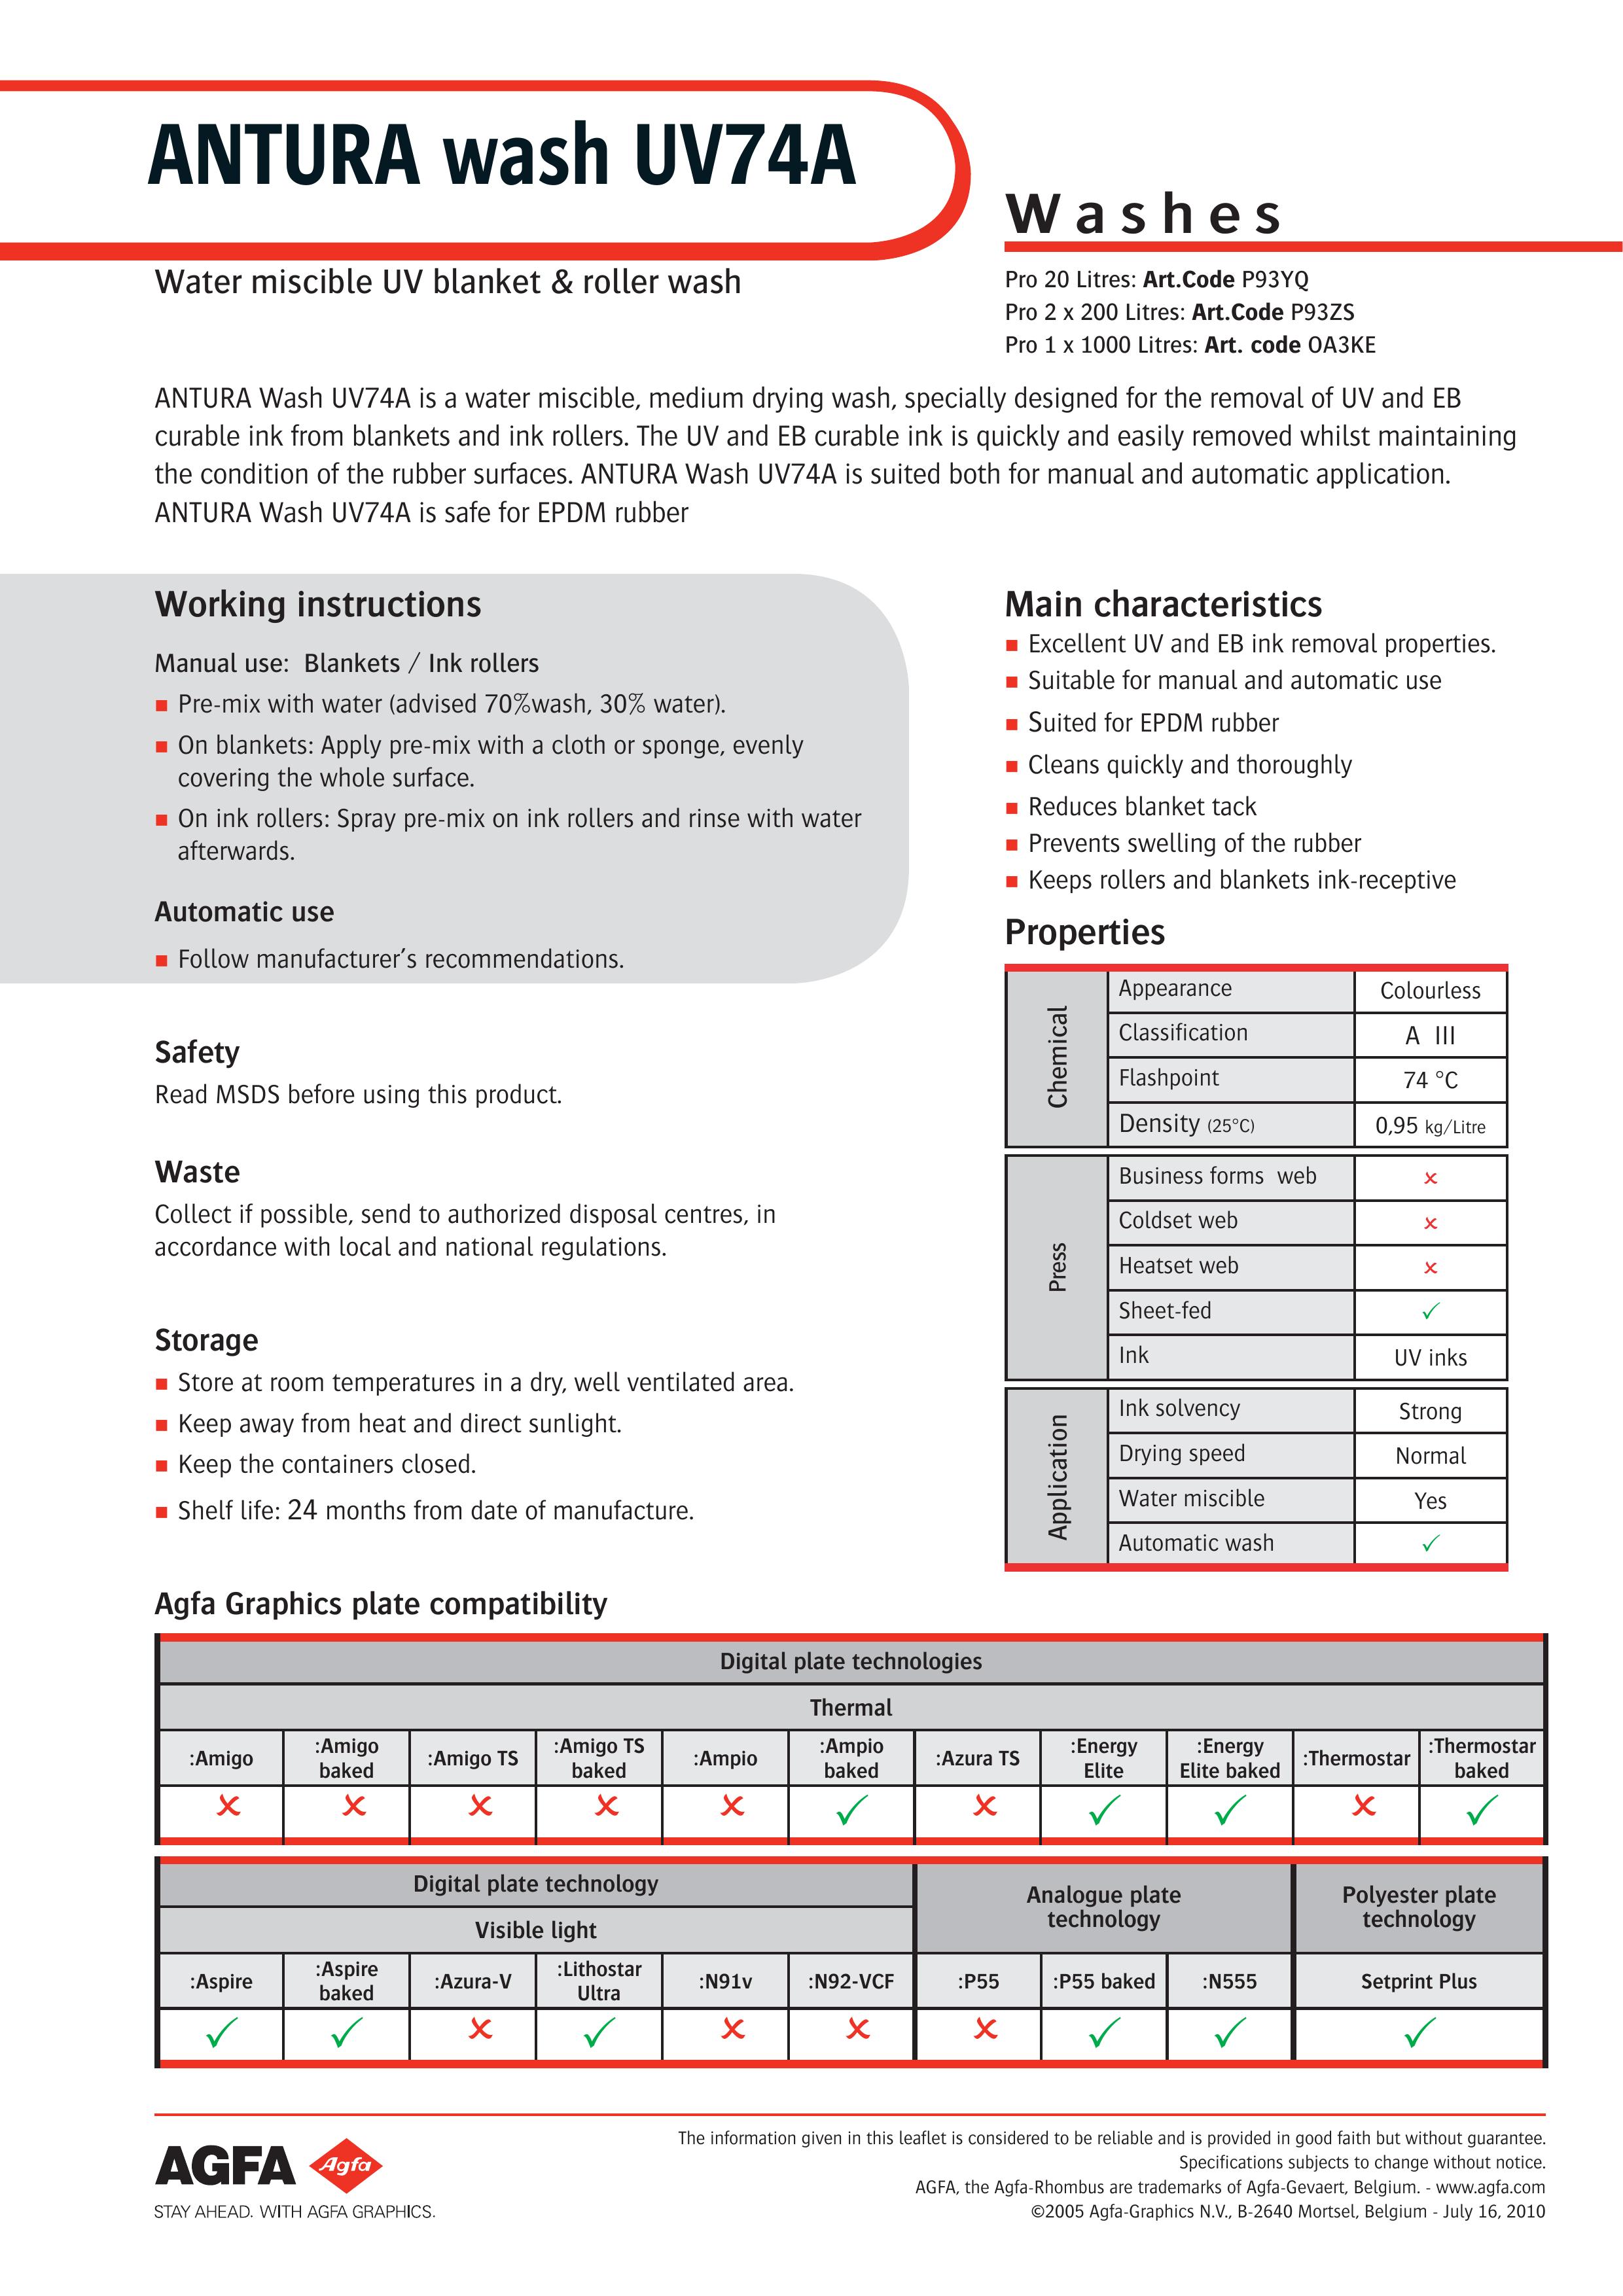 AGFA UV74A Washer User Manual